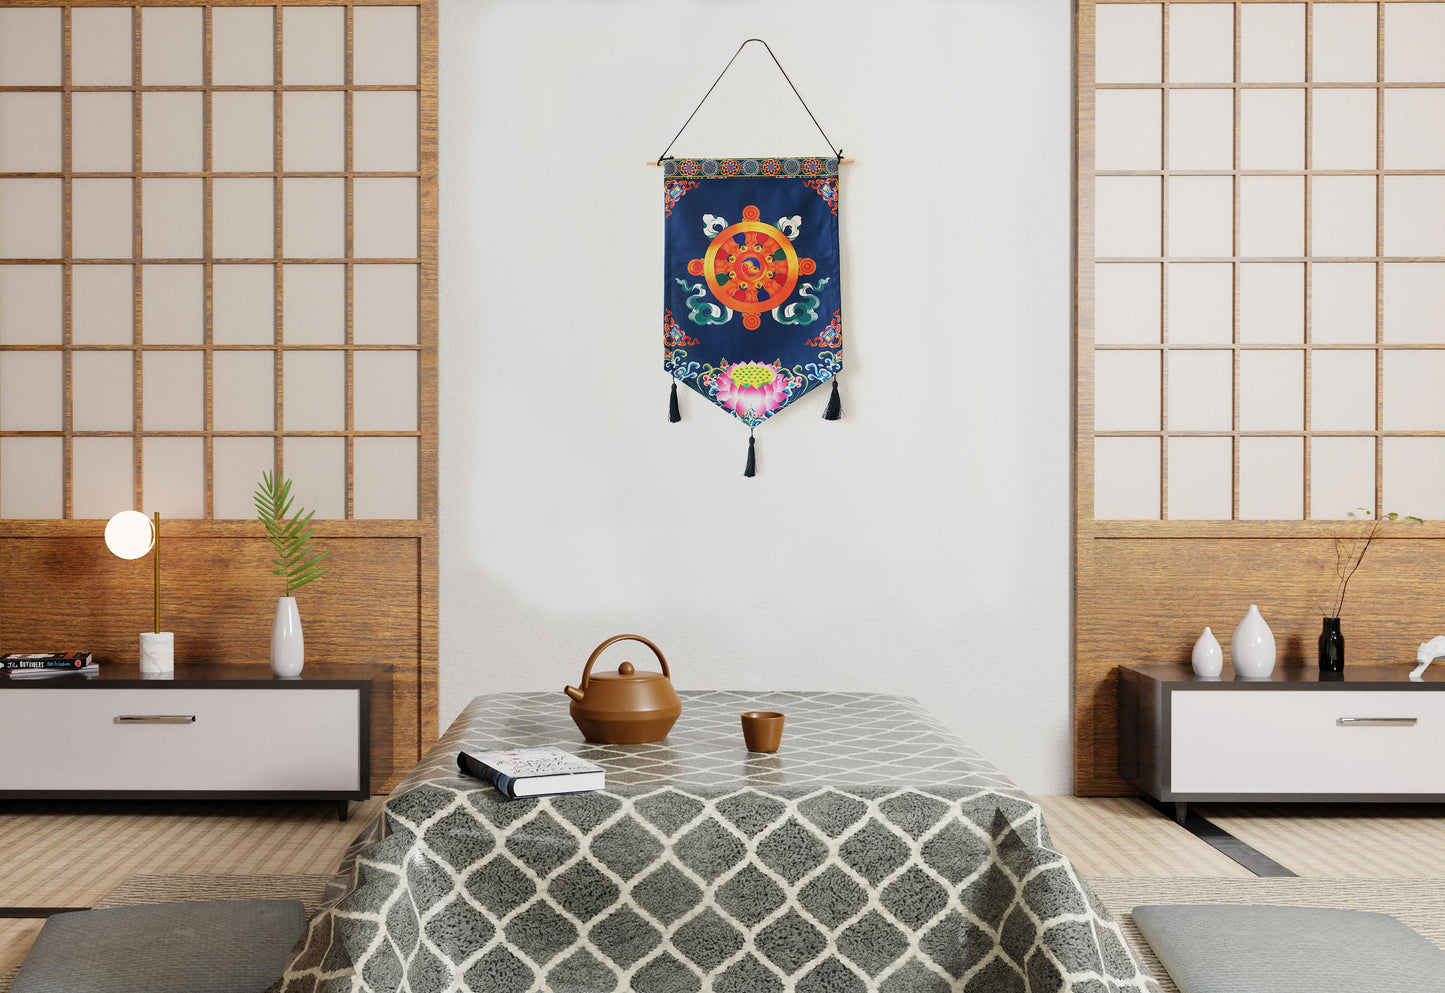 Tibetan Buddhist Golden Wheel Wall Hanging Tassels Tapestry, 25"X16" Blue, Asian Chinese Indian Wall Art Home Décor